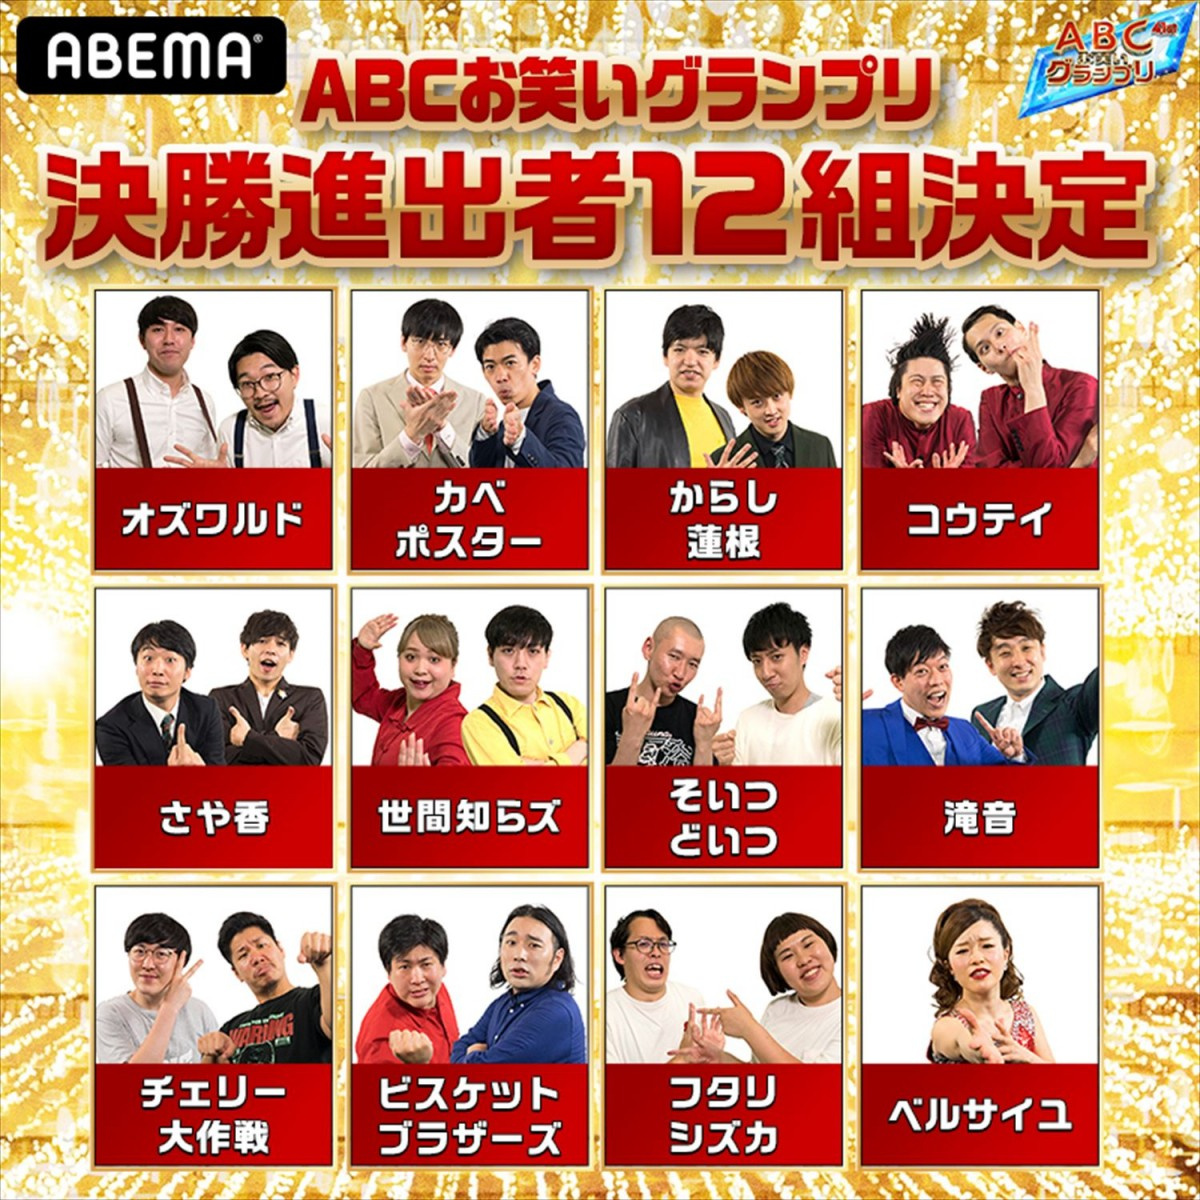 Abcお笑いグランプリ 決勝進出者12組発表 Oricon News